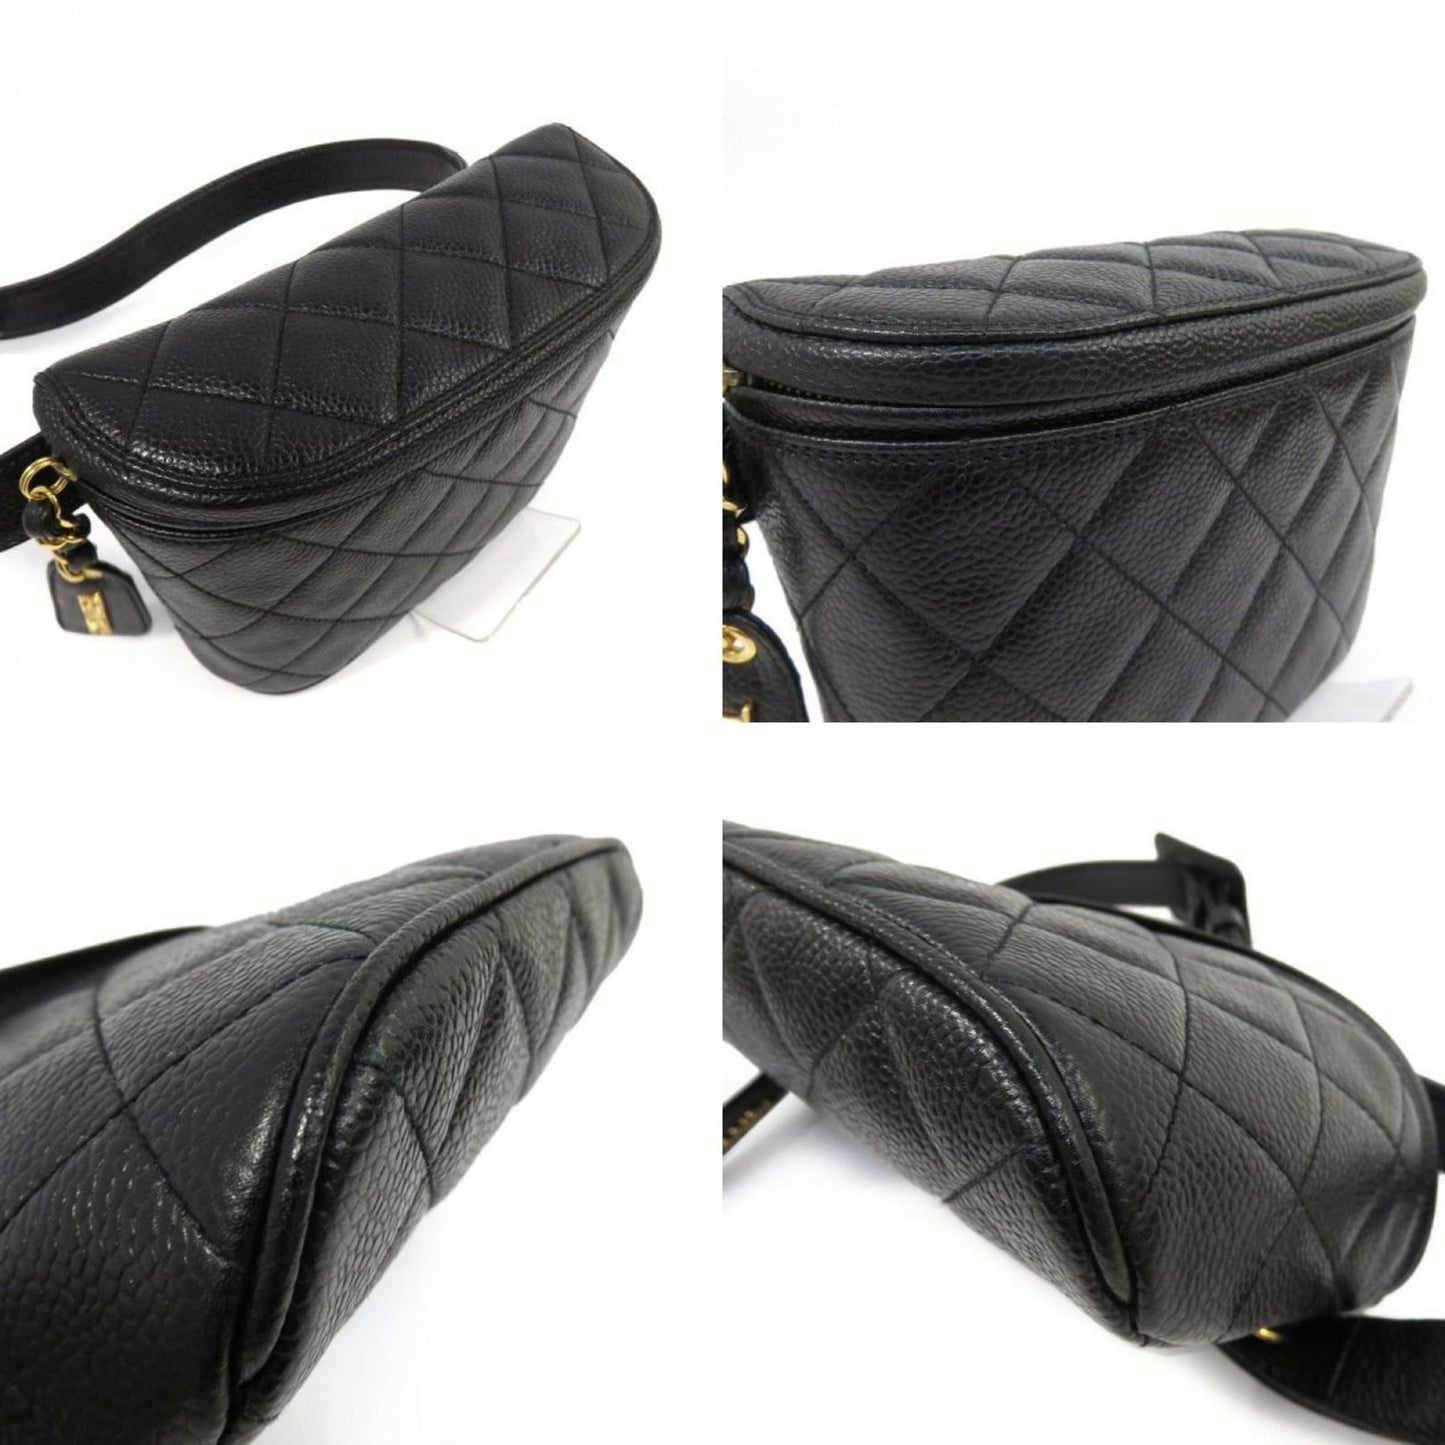 Chanel Women's Elegant Black Leather Clutch Bag in Black